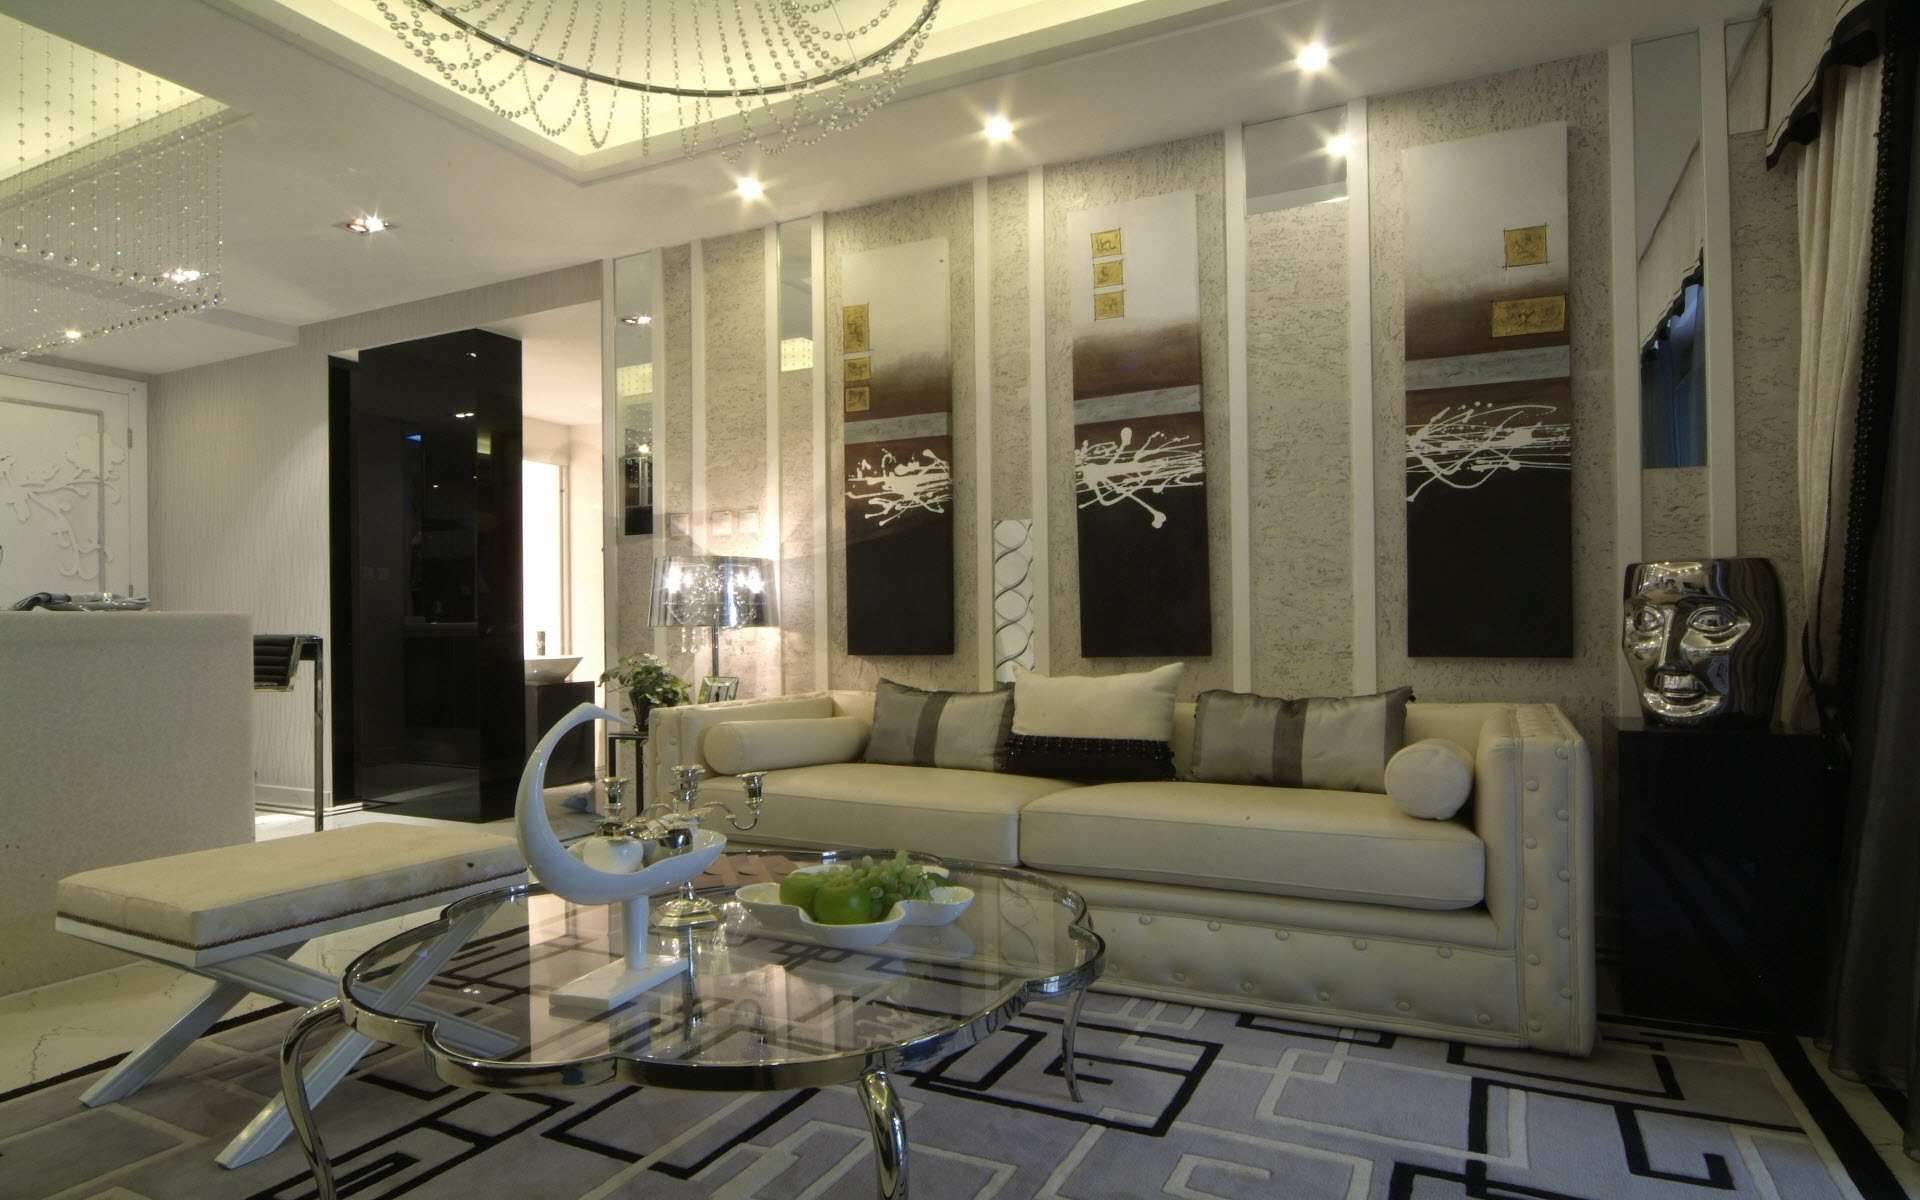 Room design modern living room designs with grey decorative wallpaper